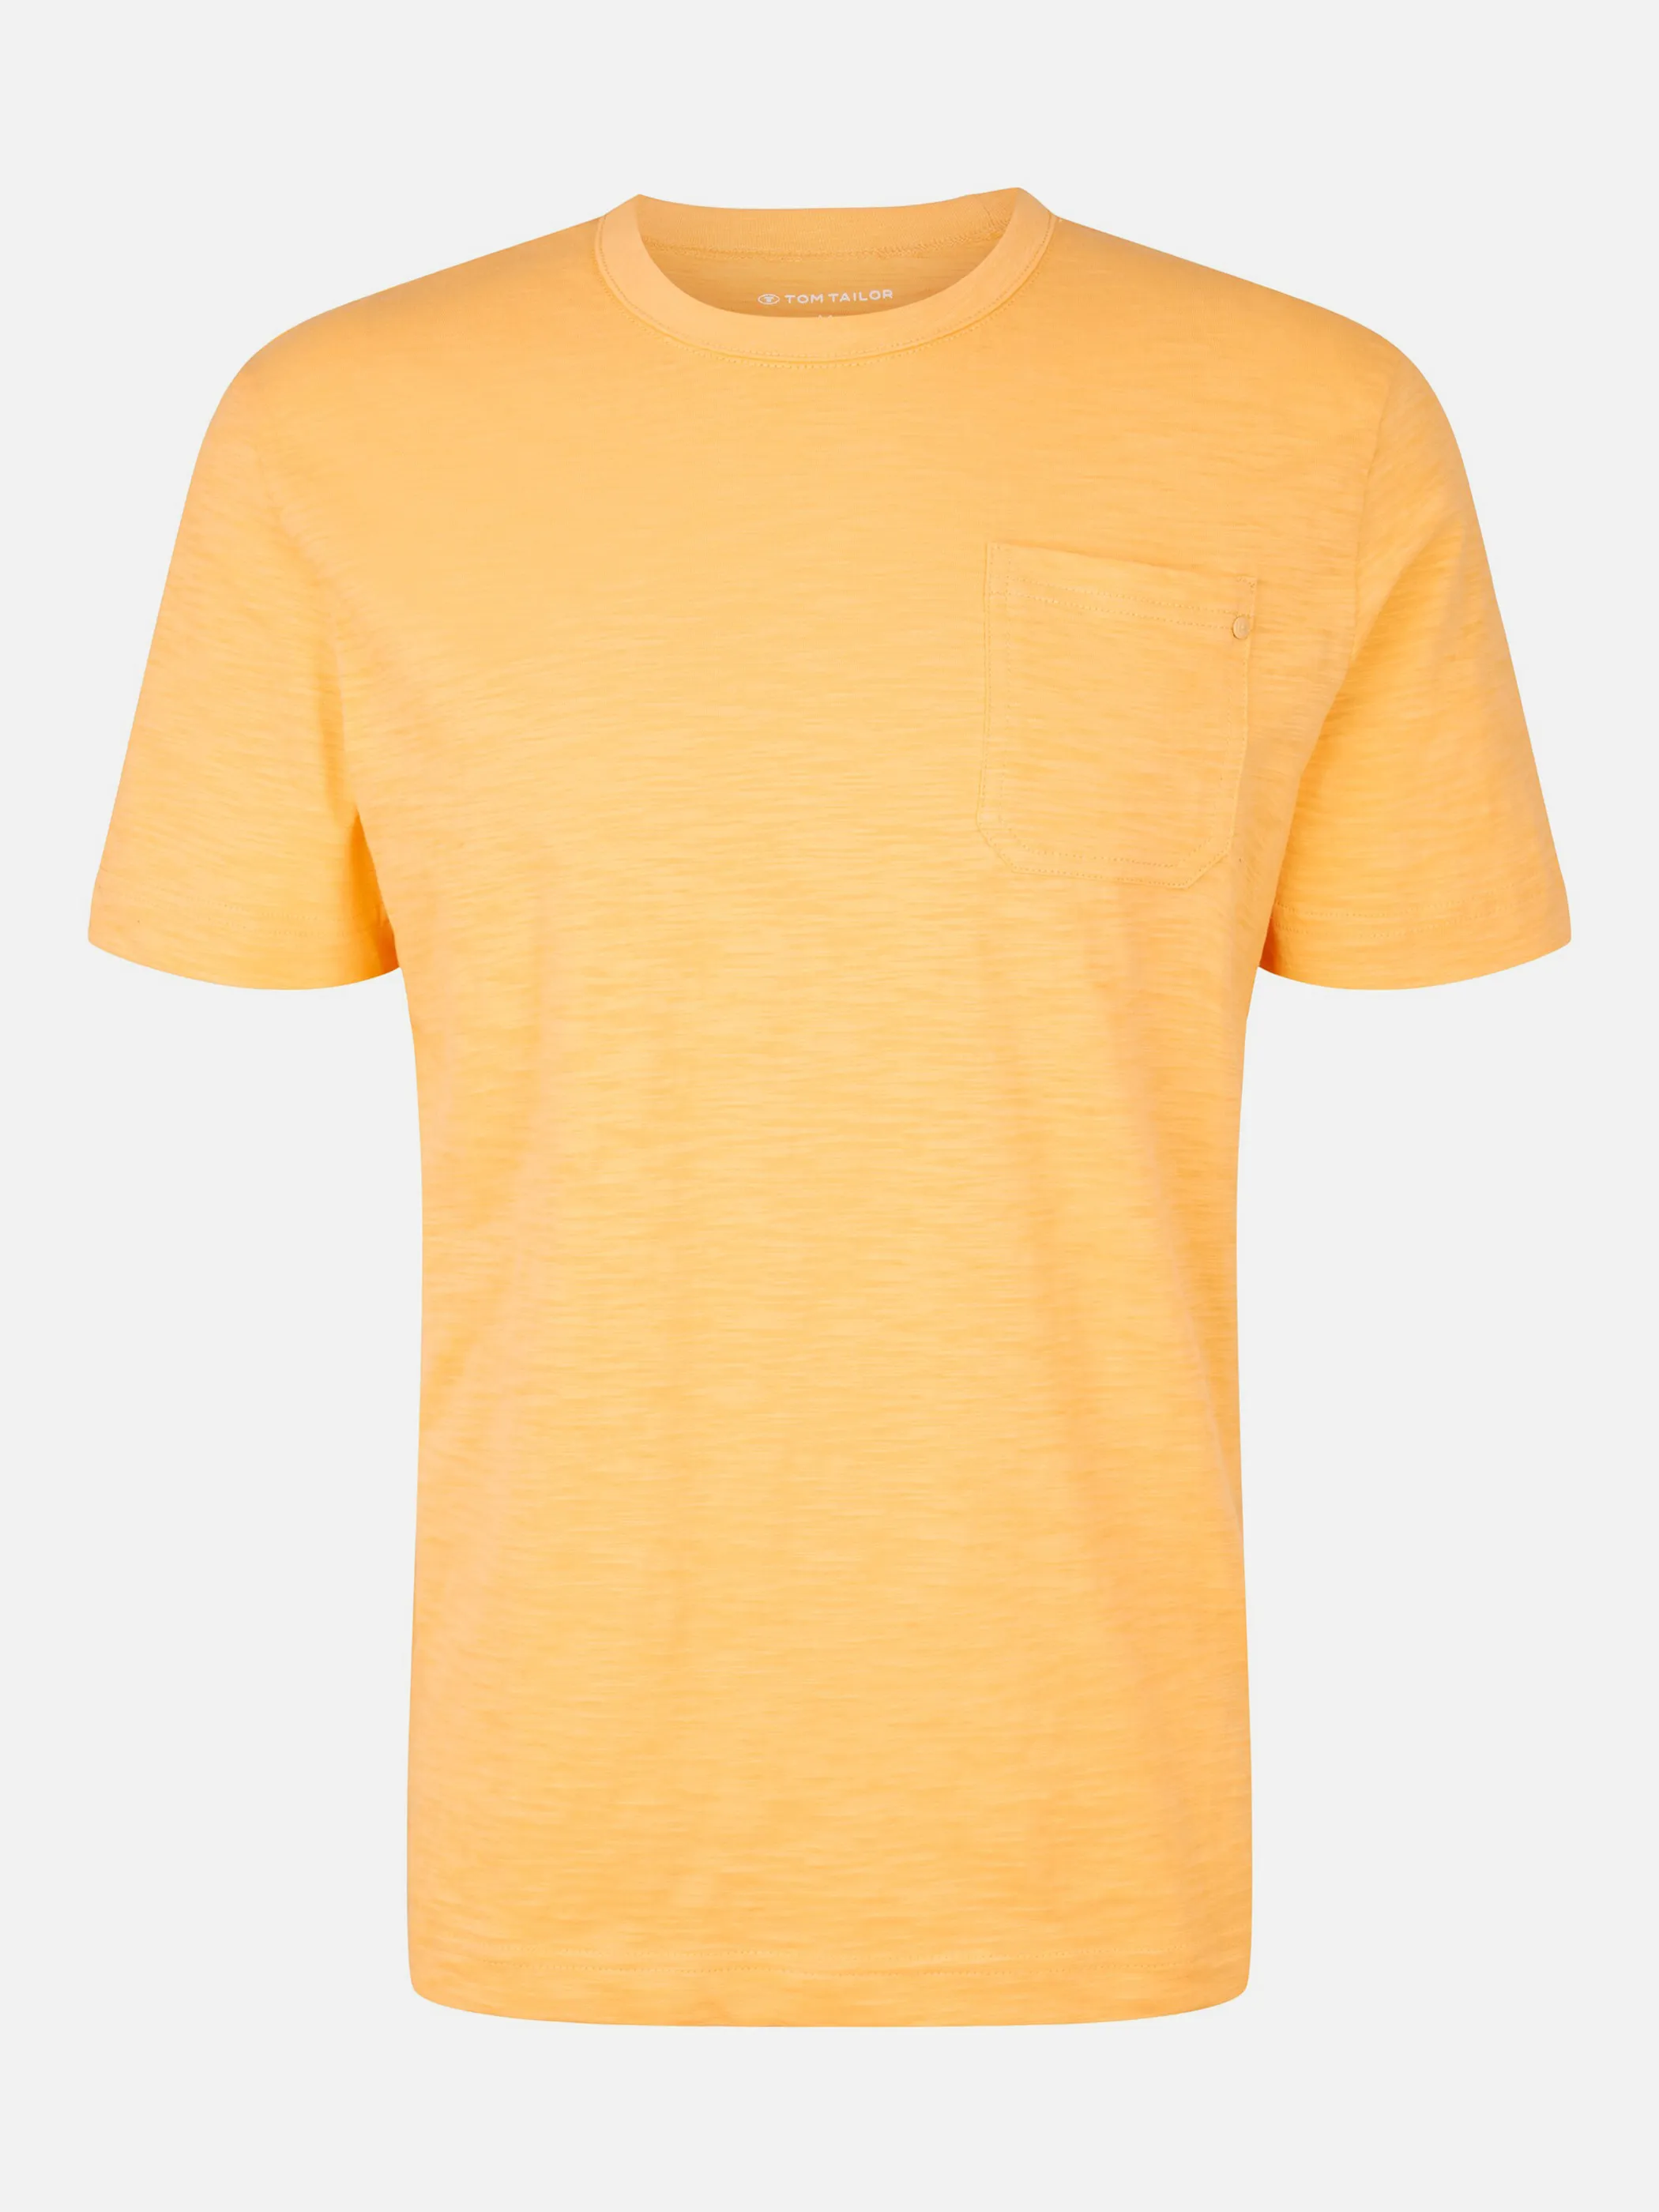 Tom Tailor 1035615 basic crewneck t-shirt Orange 874967 22225 1